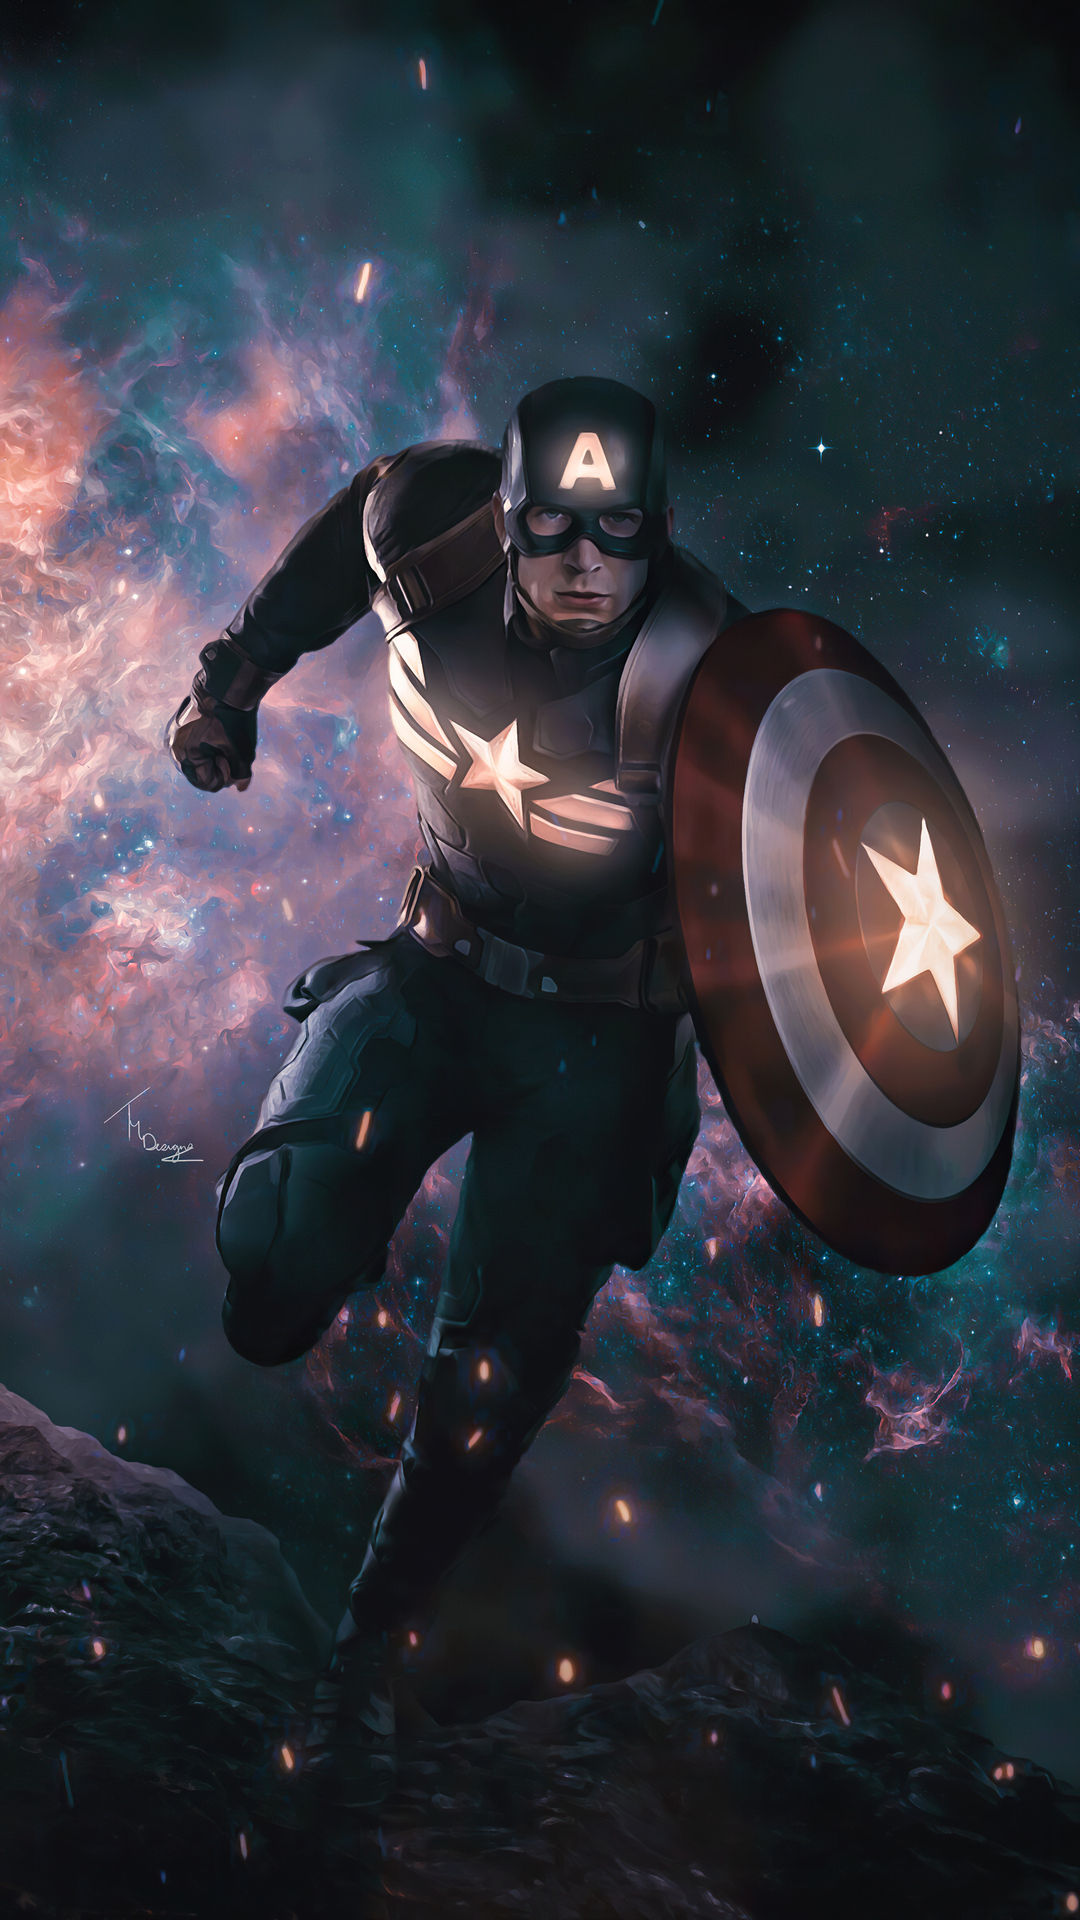 1080x1920 2020 Captain America 4k Artwork Iphone 7,6s,6 Plus, Pixel xl